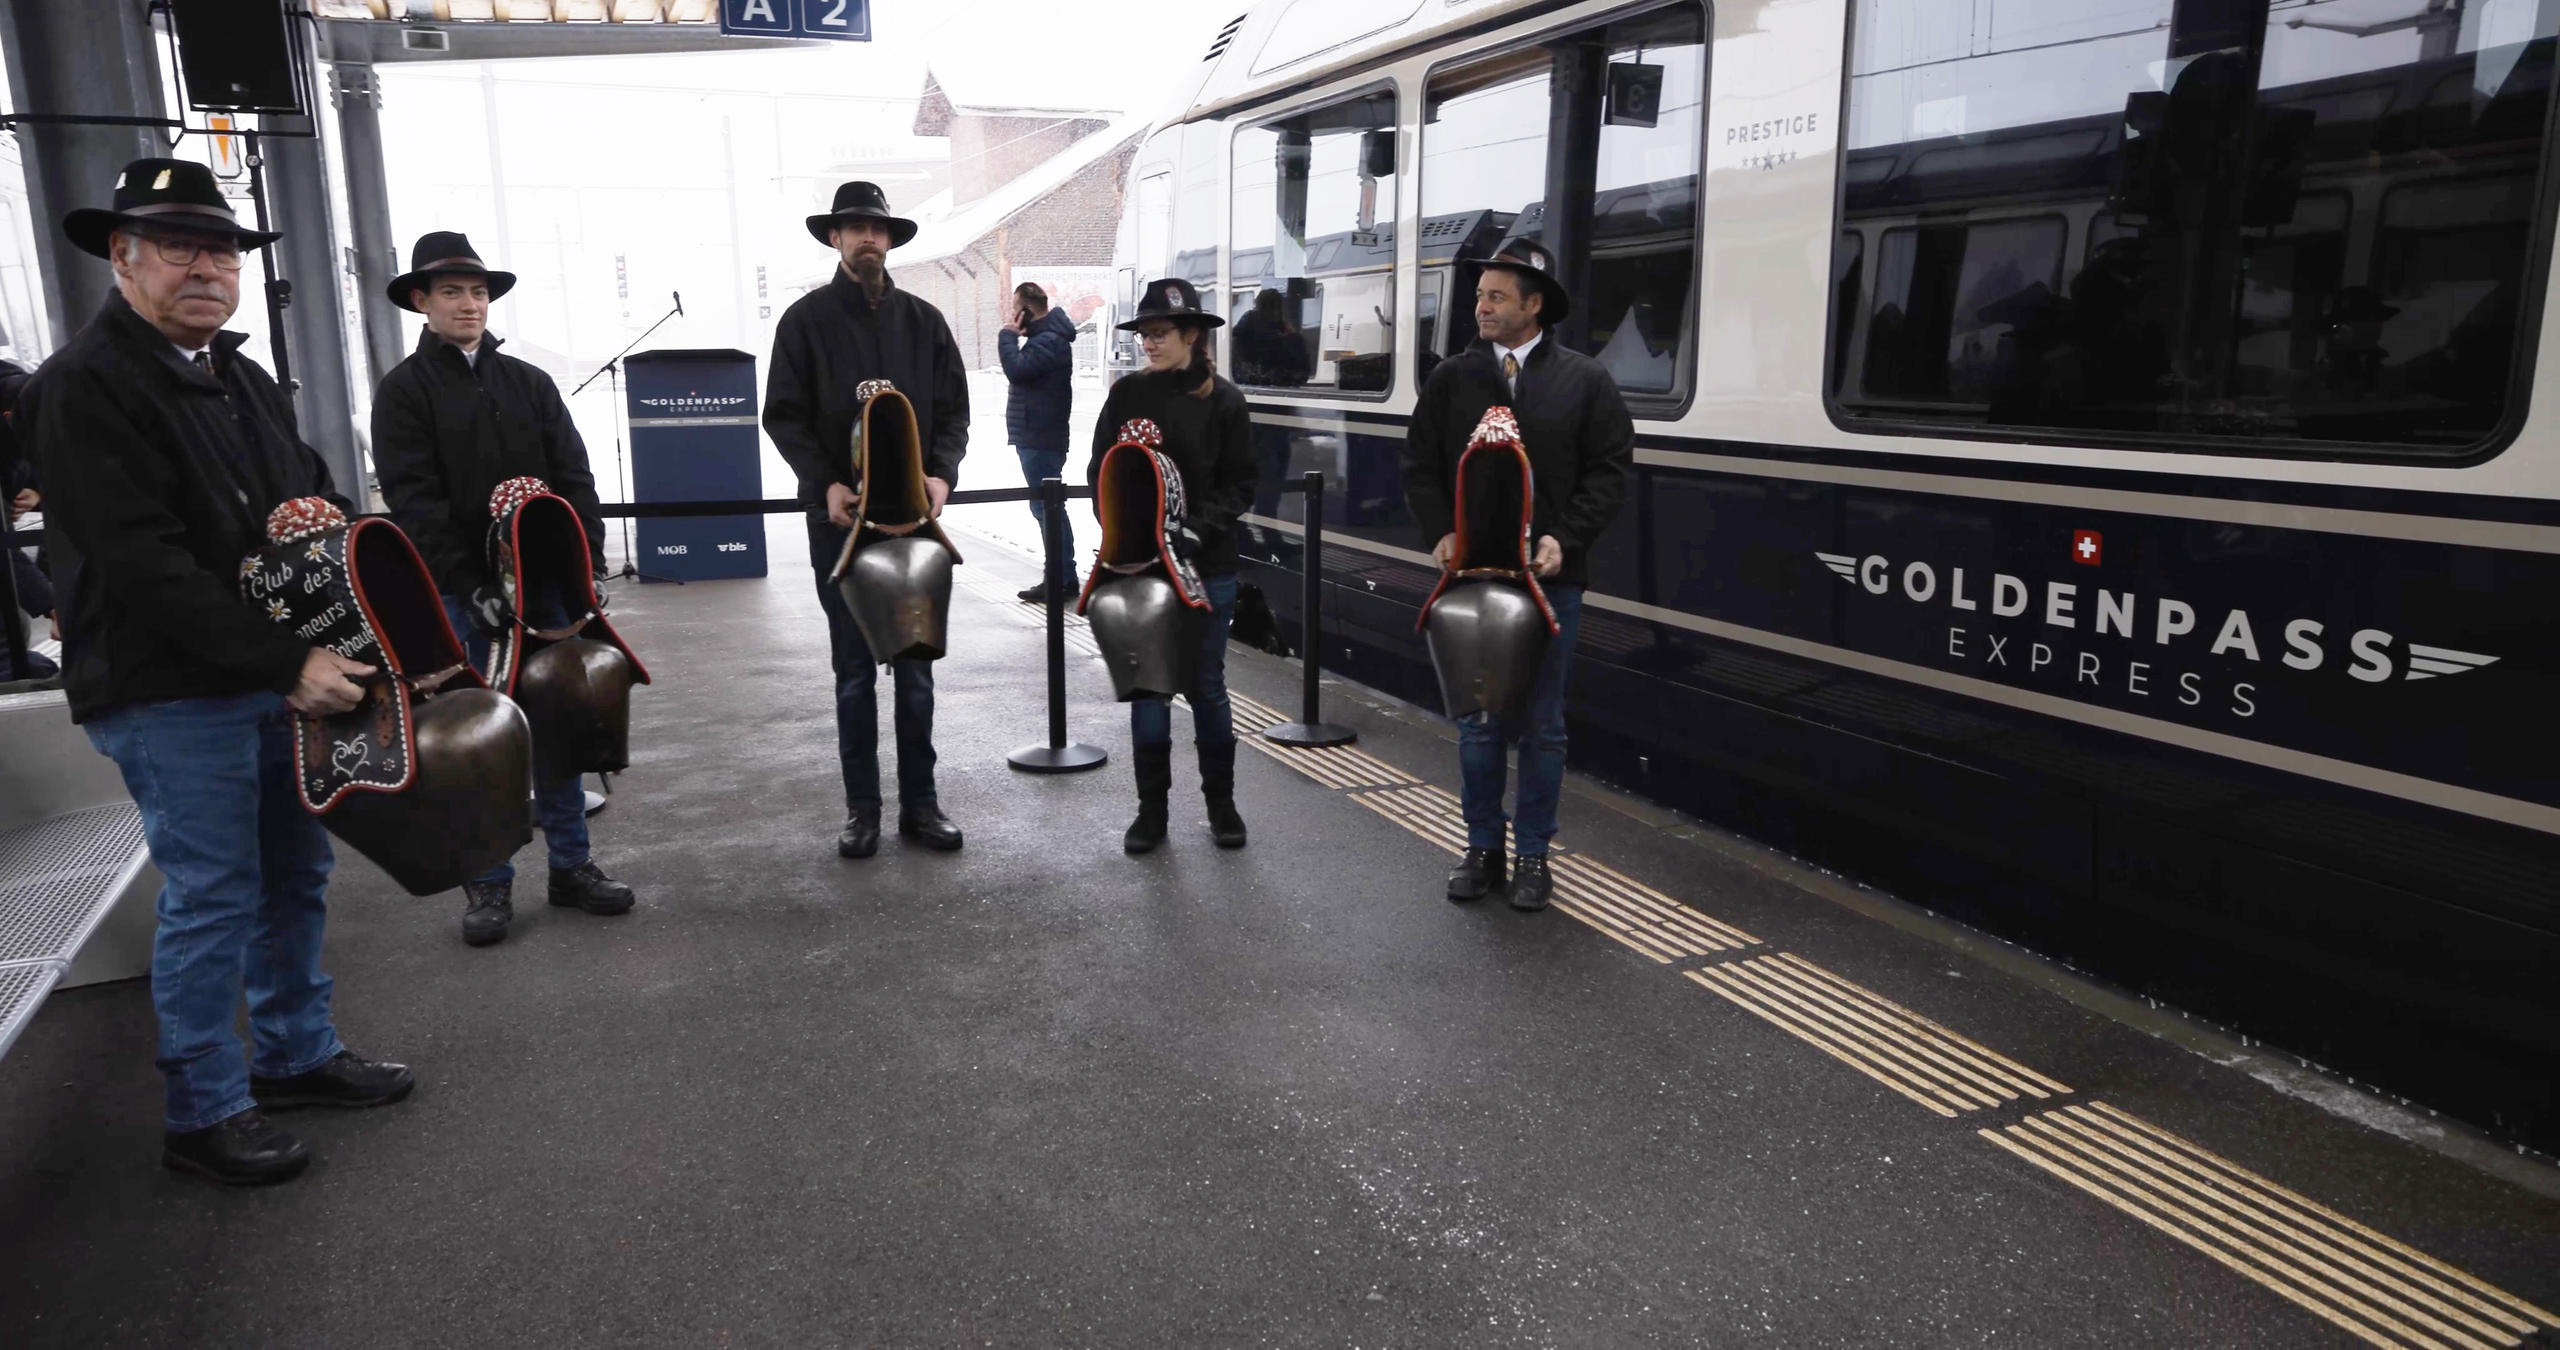 Bellringers inaugurate new GoldenExpress trains in Gstad